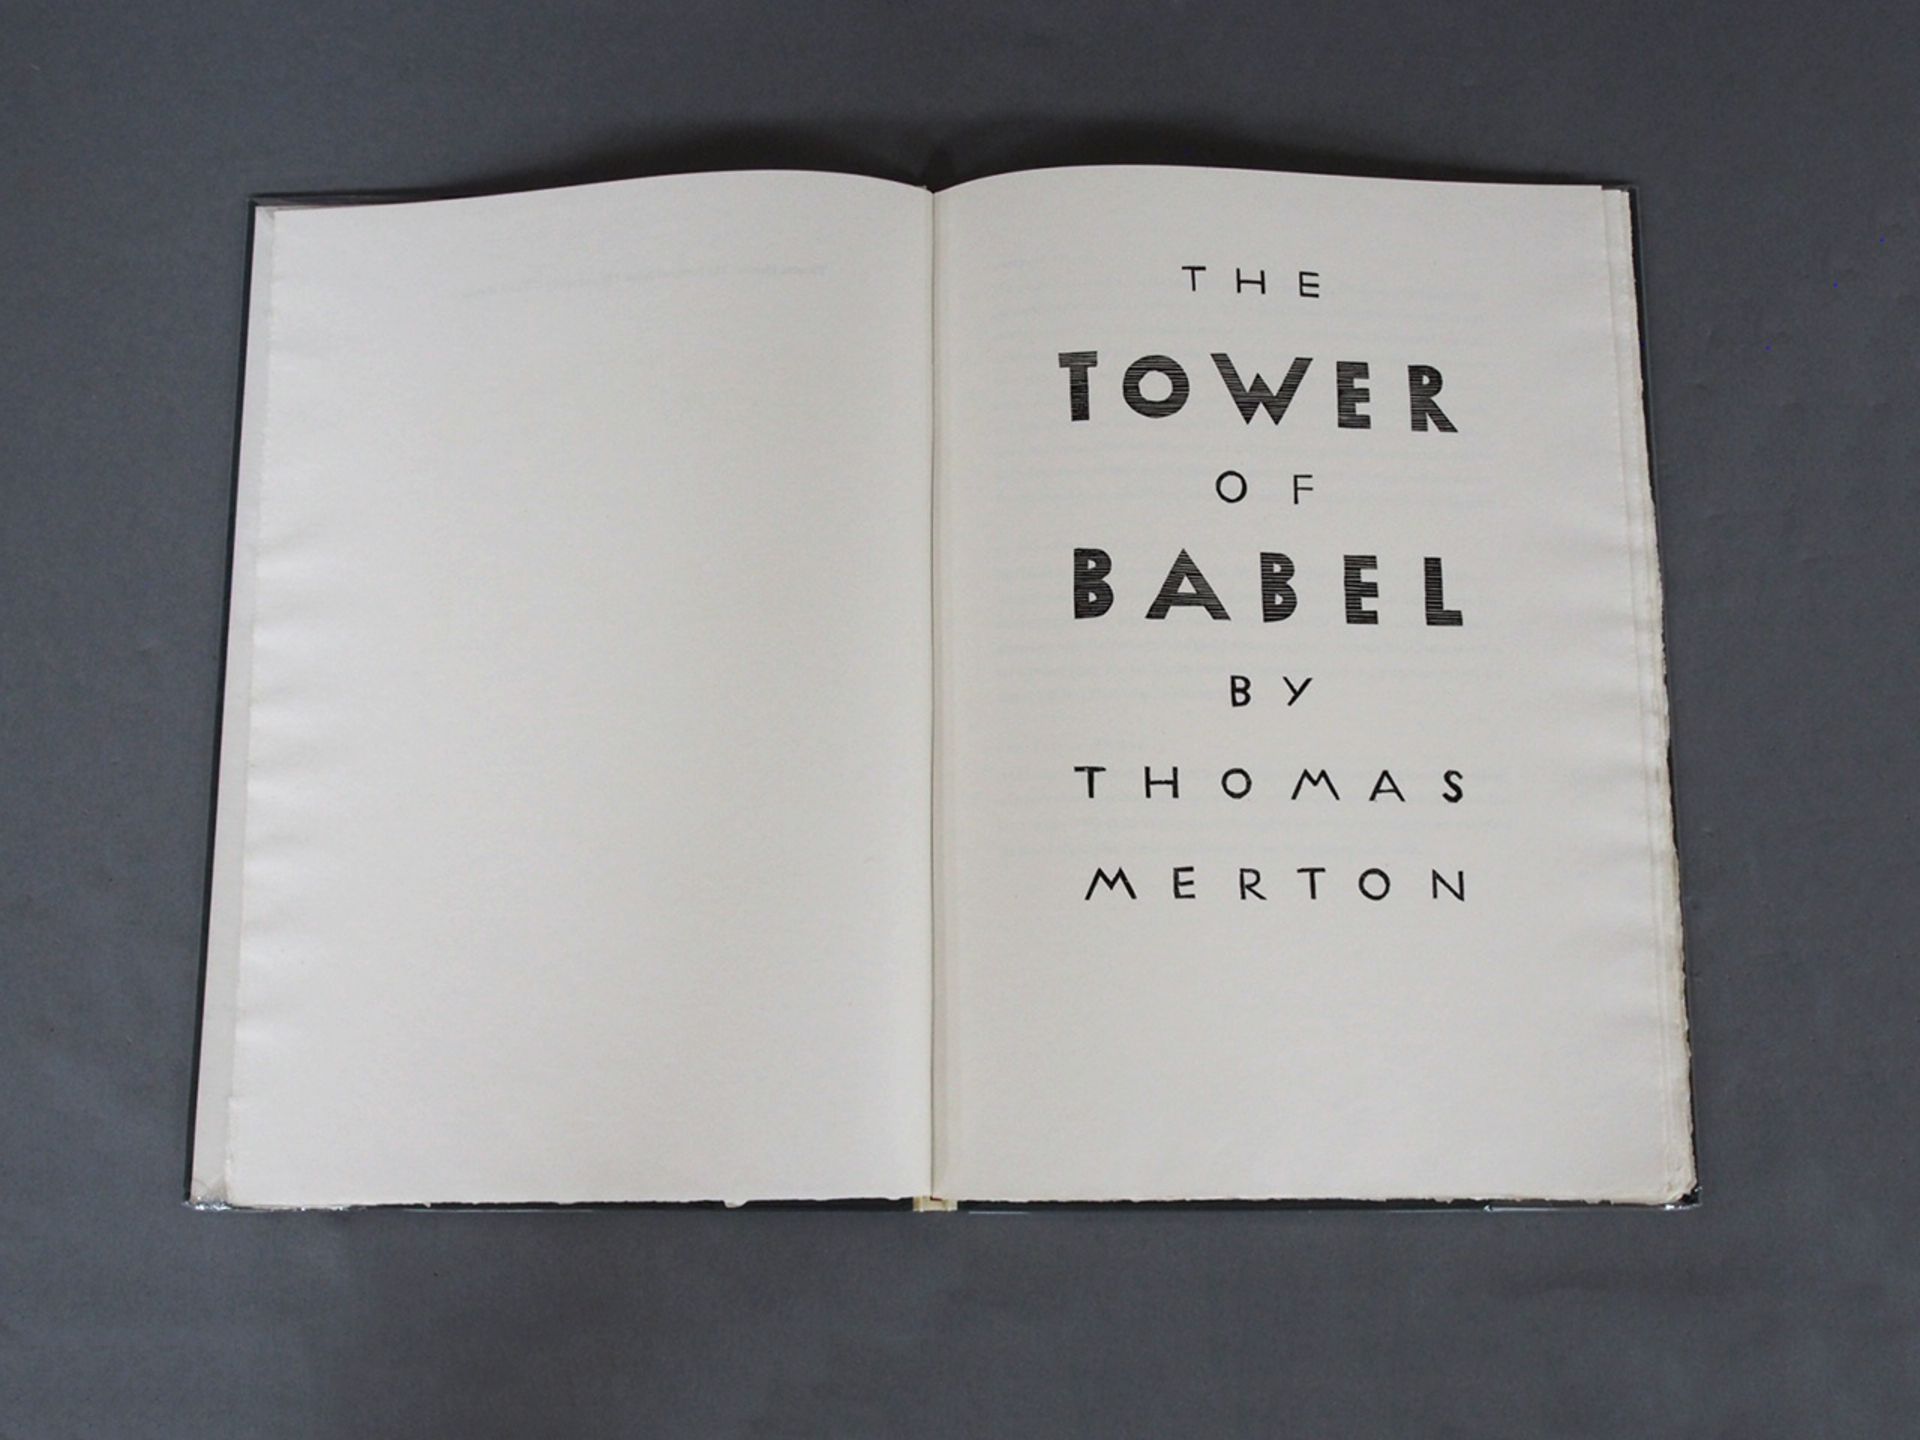 MARCKS, Gerhard: Thomas Merton - The Tower of Babel